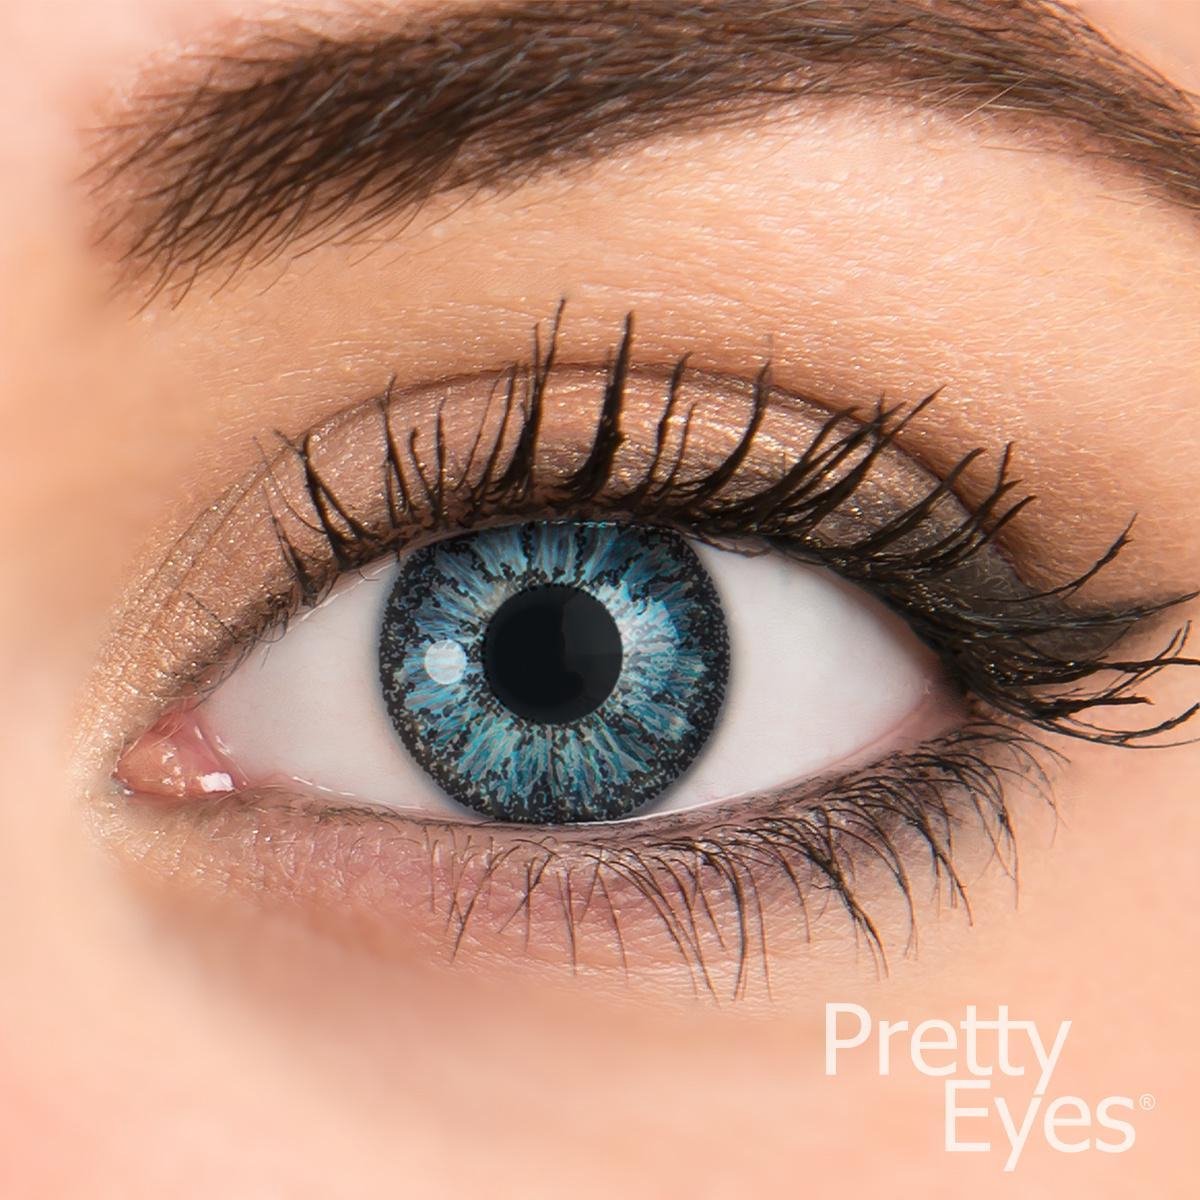 Pretty Eyes kleurlenzen blauw 2 stuks - maandlenzen | bol.com